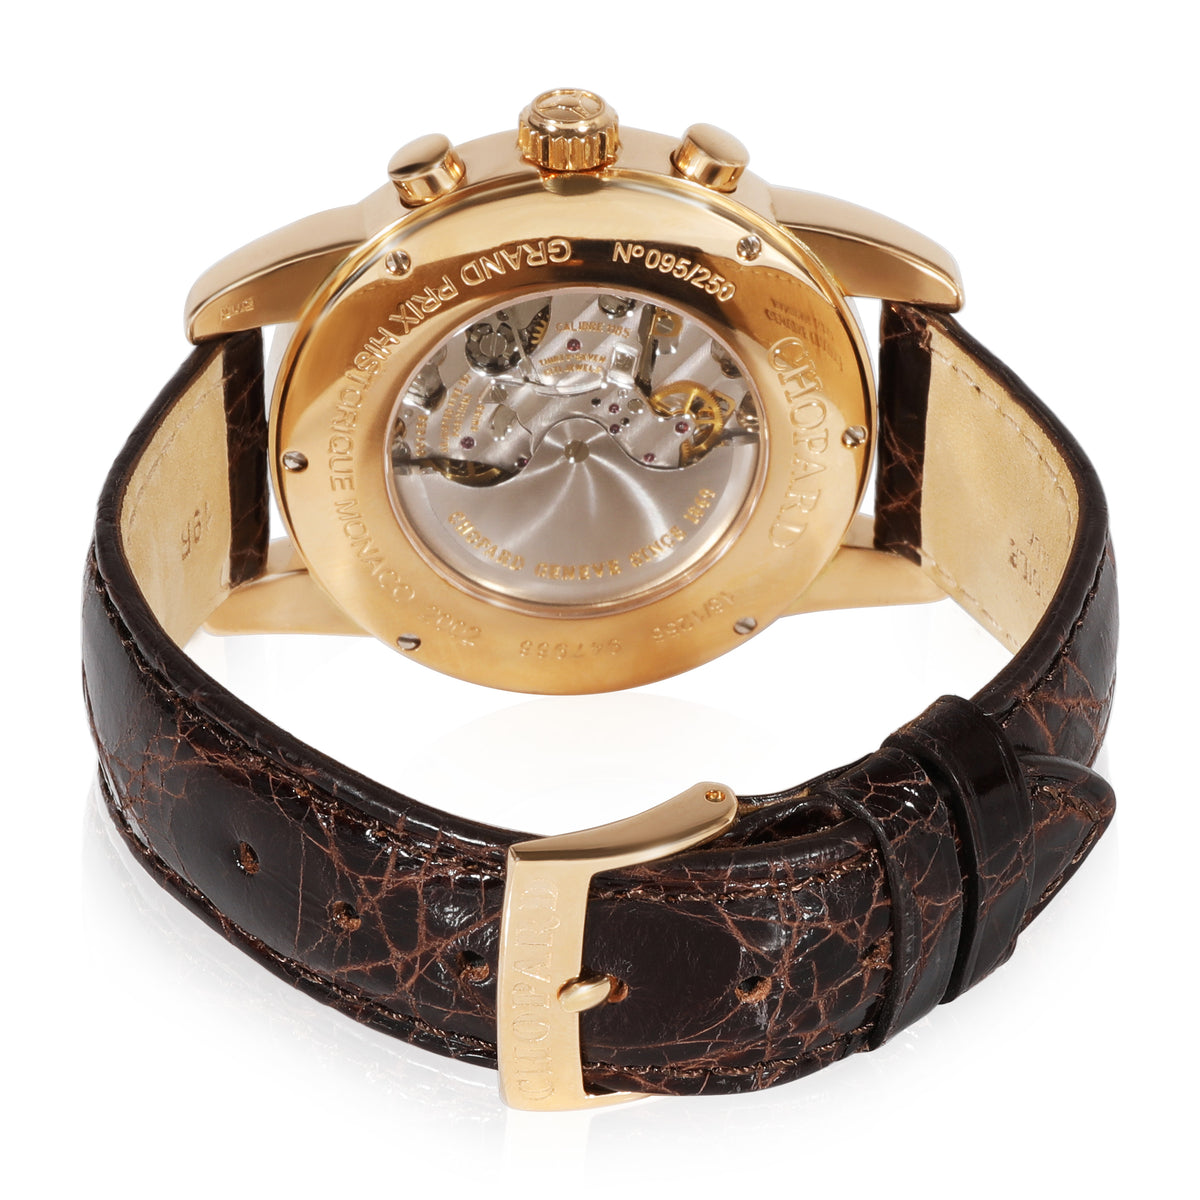 Chopard Monaco Historique 16/1256 Men's Watch in 18kt Yellow Gold